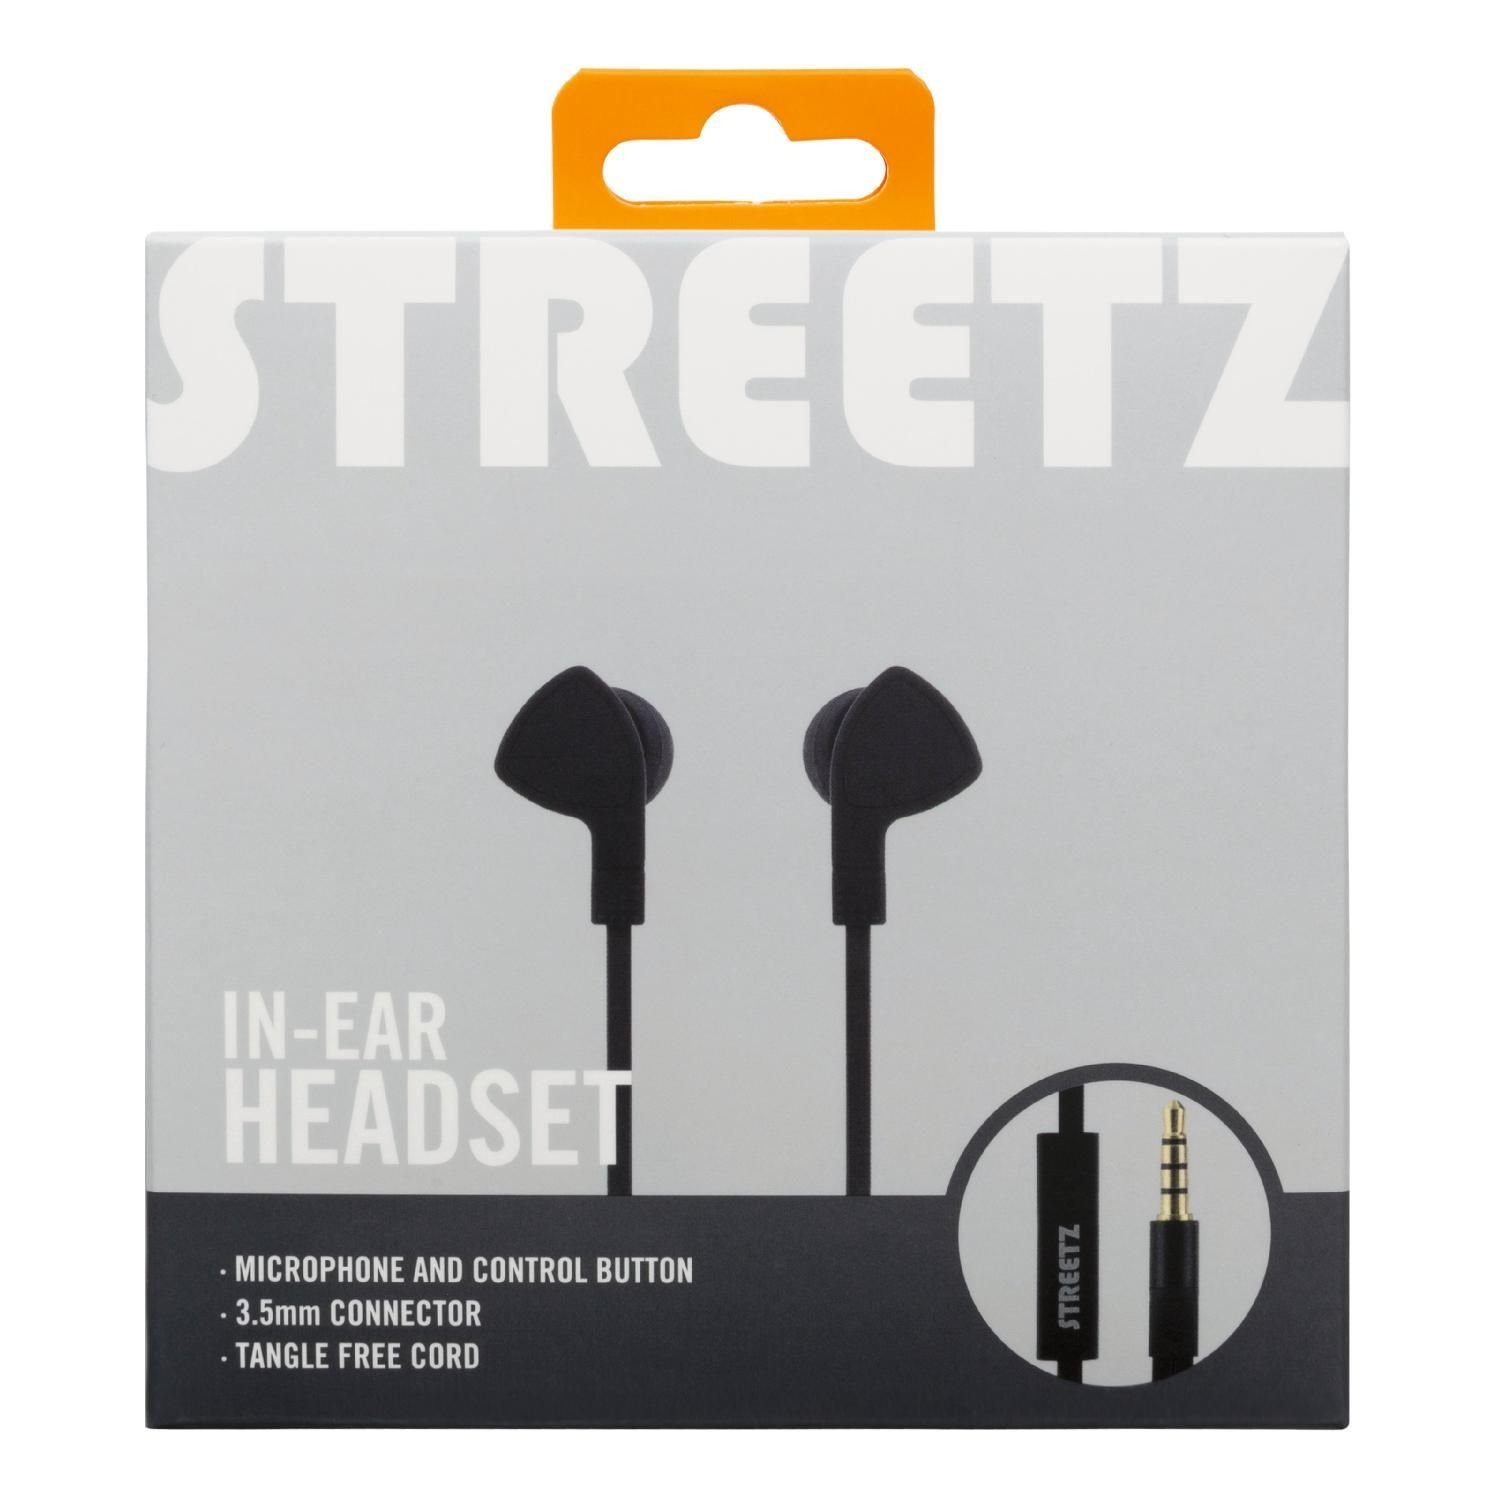 STREETZ HL-W102 Kopfhörer 1.2m Silikonohrstöpsel Herstellergarantie) (integriertes In-Ear Jahre Headset/Kopfhörer Kabel Mikrofon, 3.5mm inkl. 5